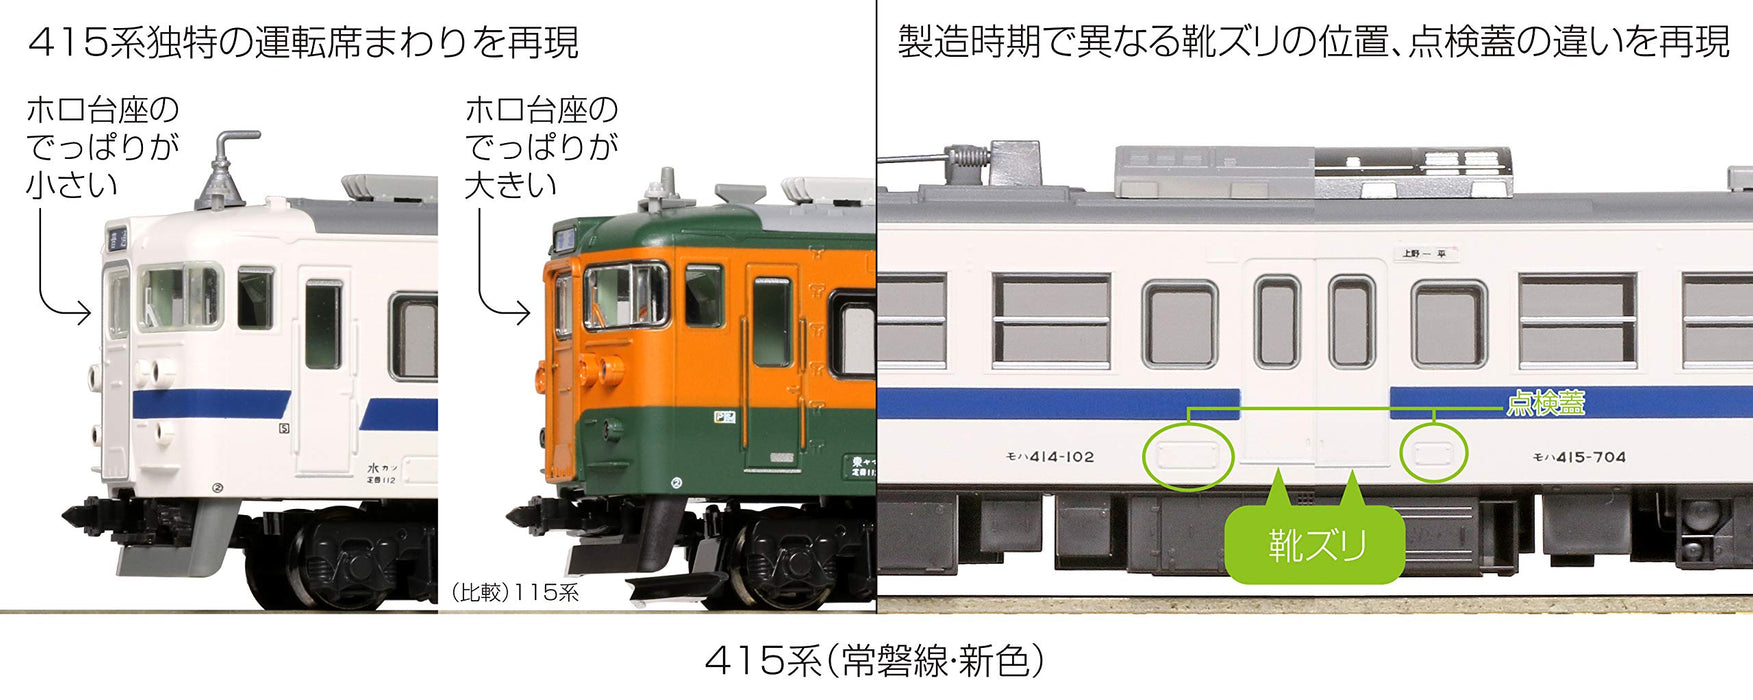 Kato N Gauge 415 Series Joban Line 4-Car Set 10-1537 Railway Model Train New Color